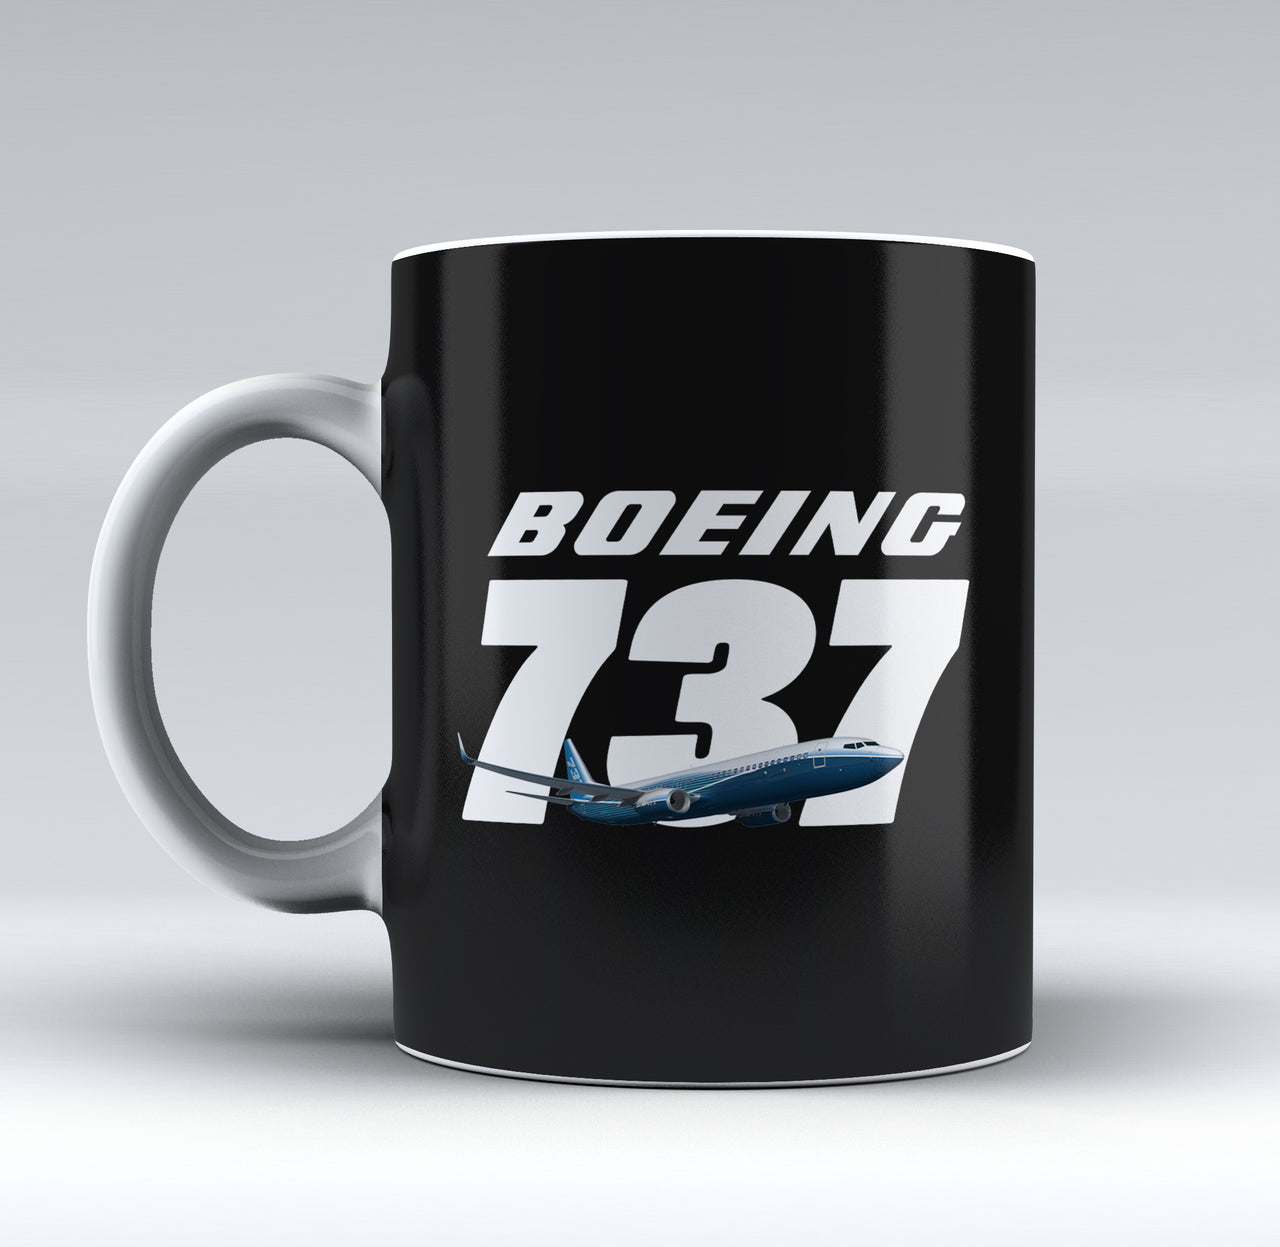 Super Boeing 737+Text Designed Mugs